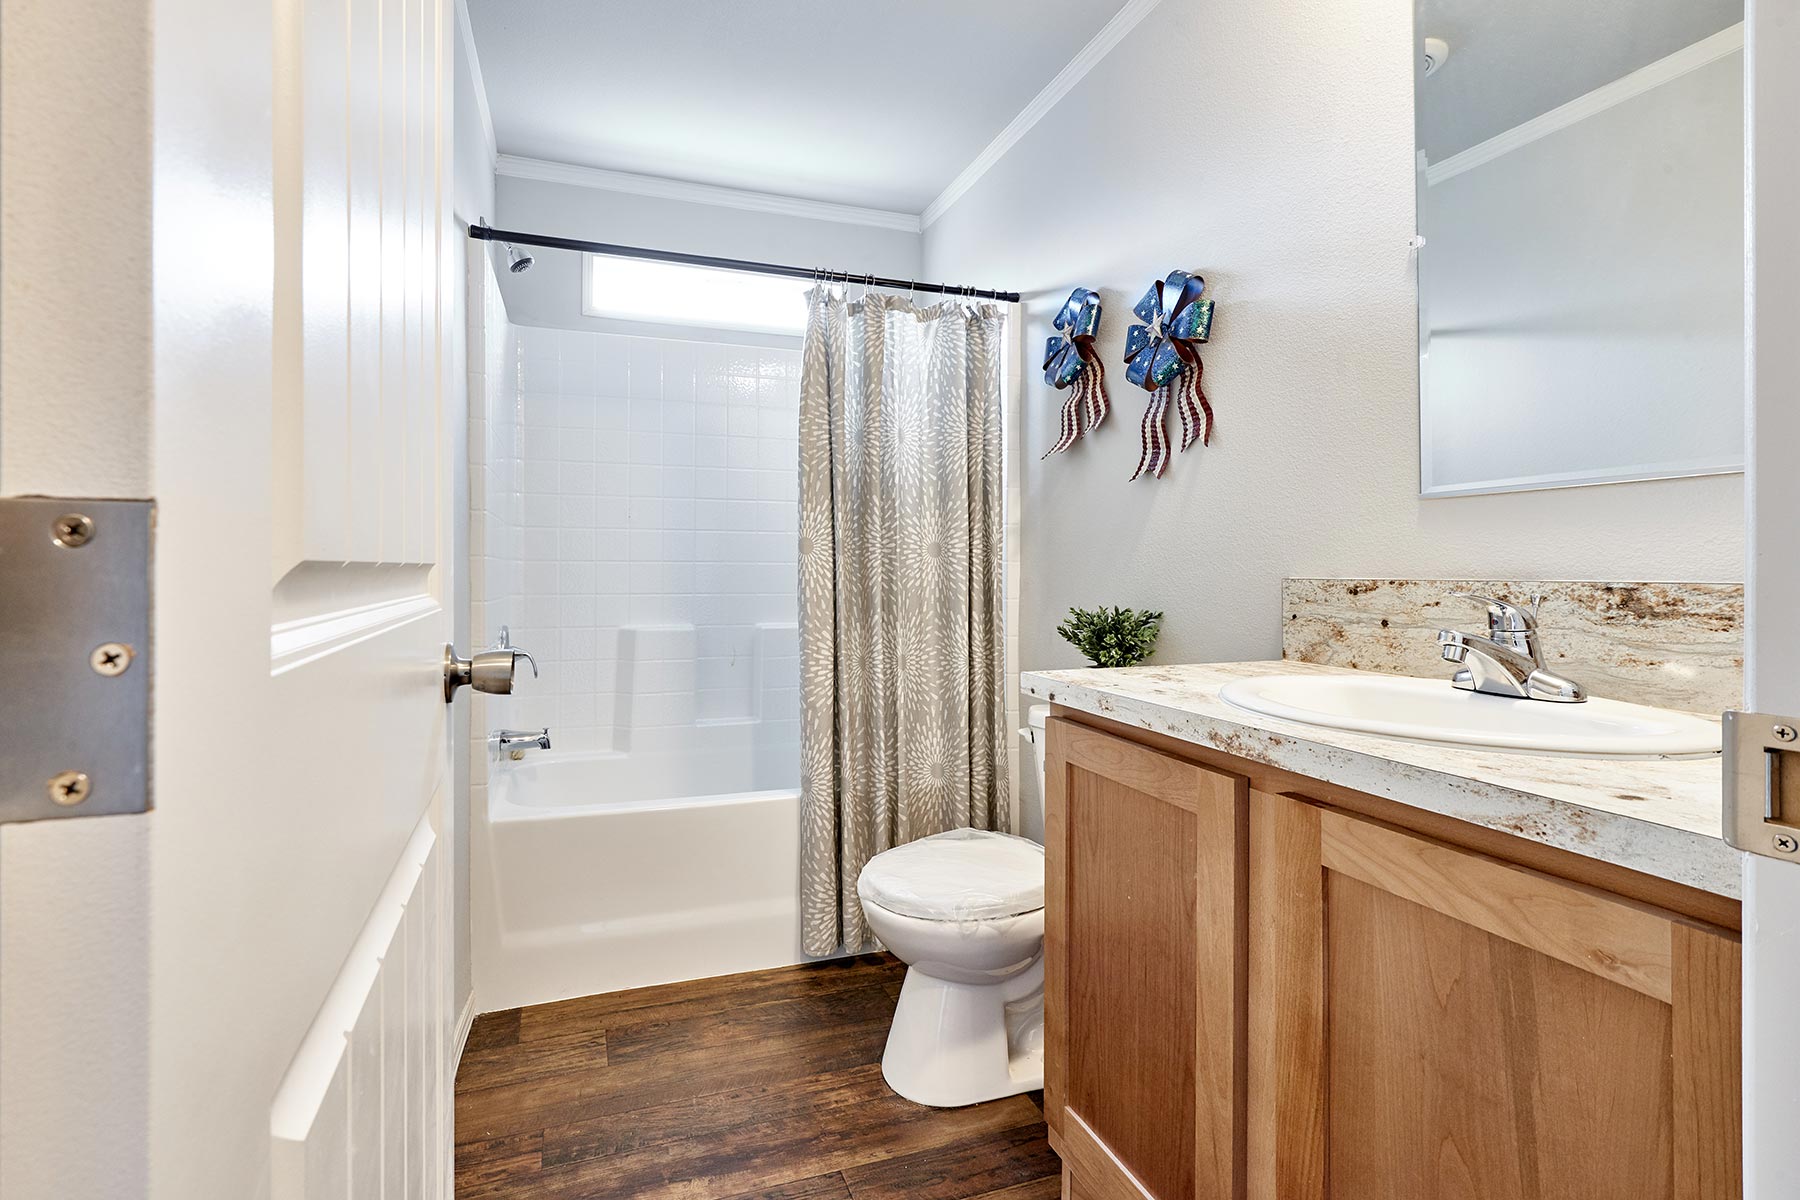 Skyline Homes Arlington G561 Manufactured Home Second bathroom featuring shower bath, single vanity, toilet